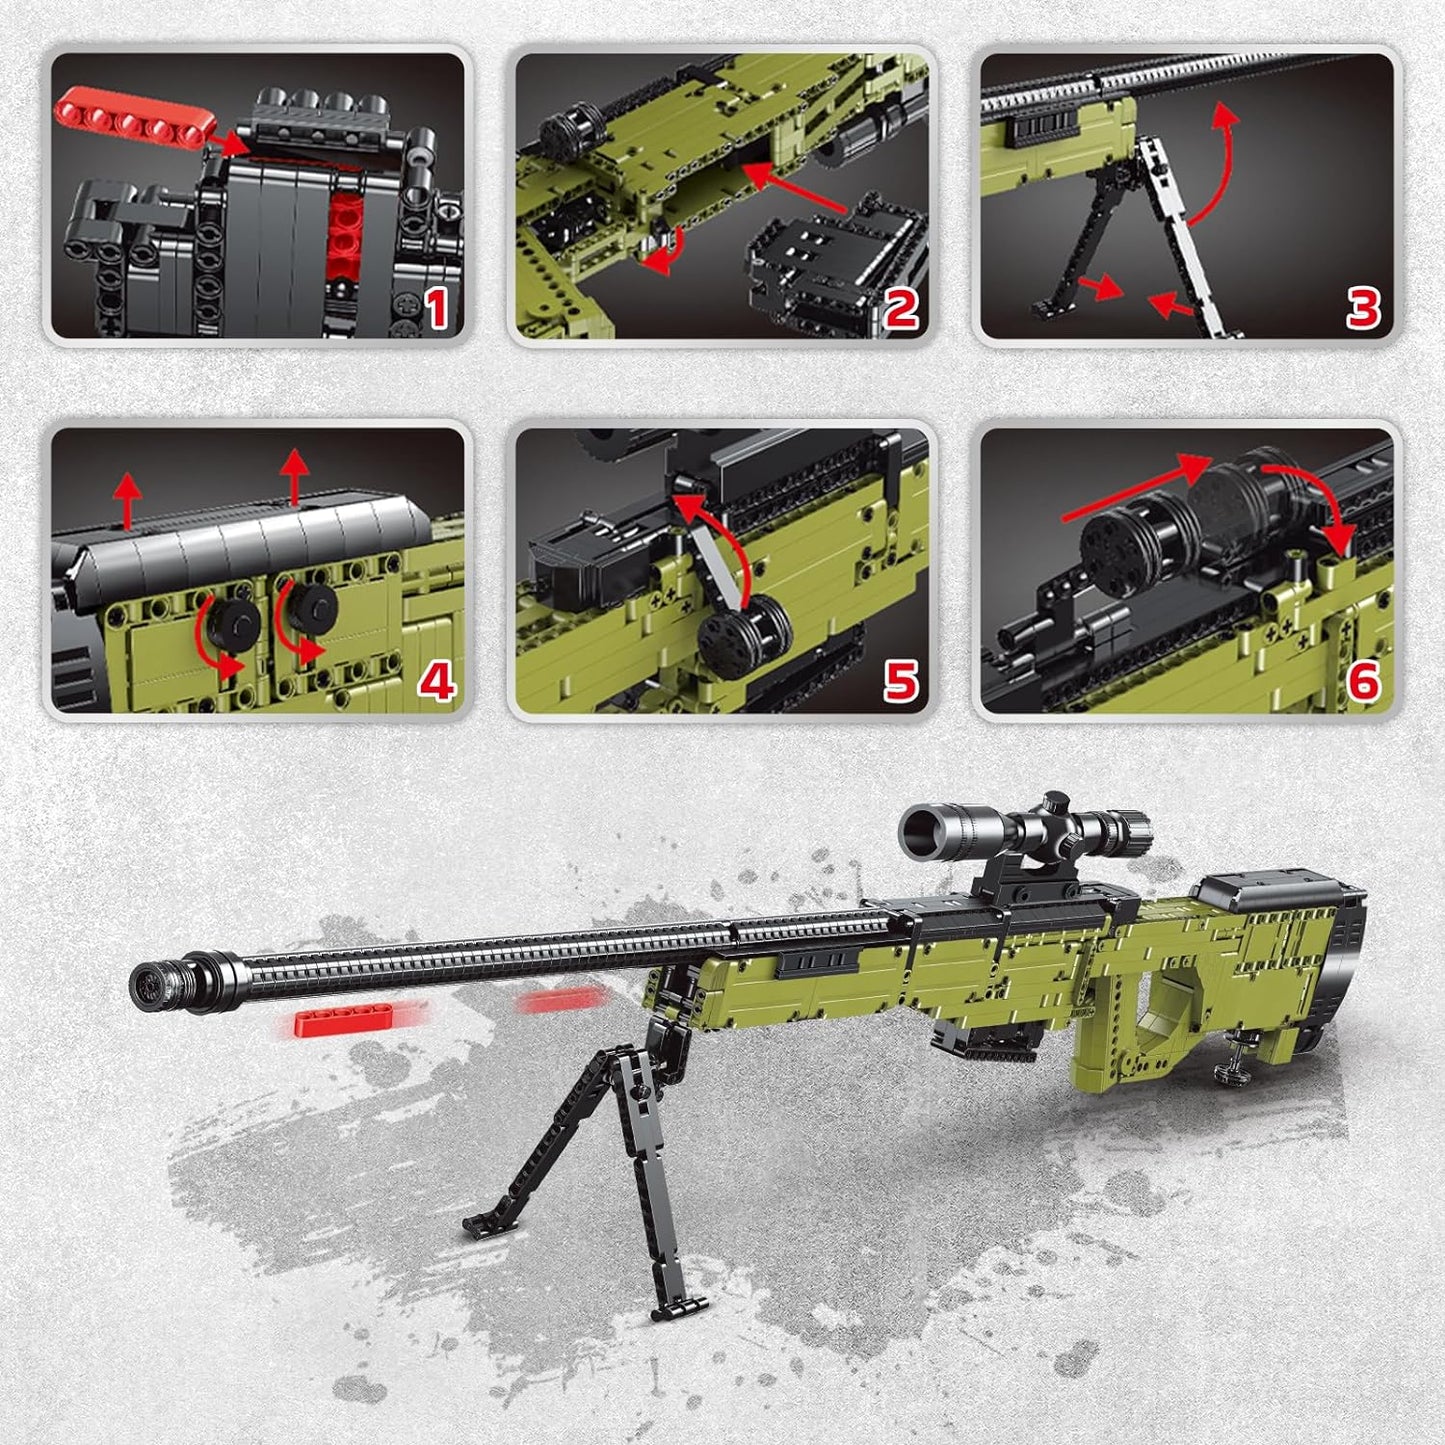 1:1 AWM Building Bricks Gun Collection Toy - 1628 PCS Model Gun Building Block Sniper Set Shootable - Simulation Weapon Toy Lovers Gift